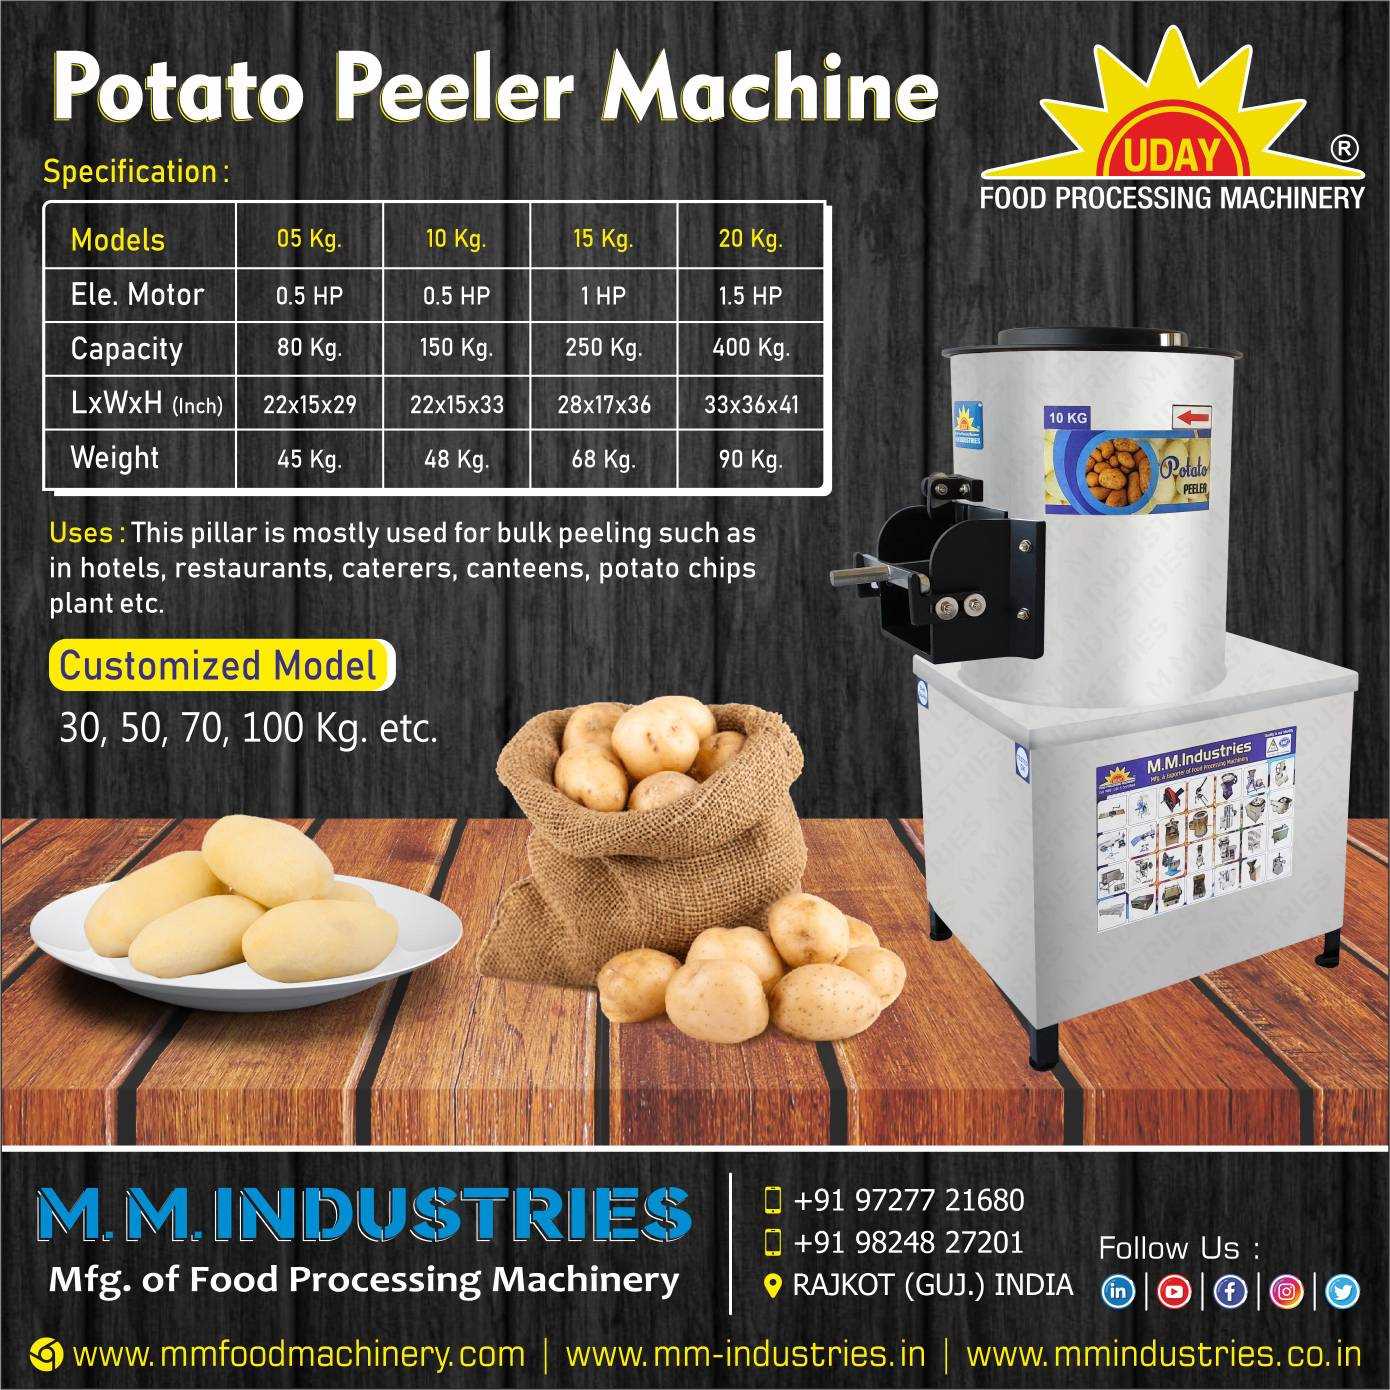 Potato Peeler Machines